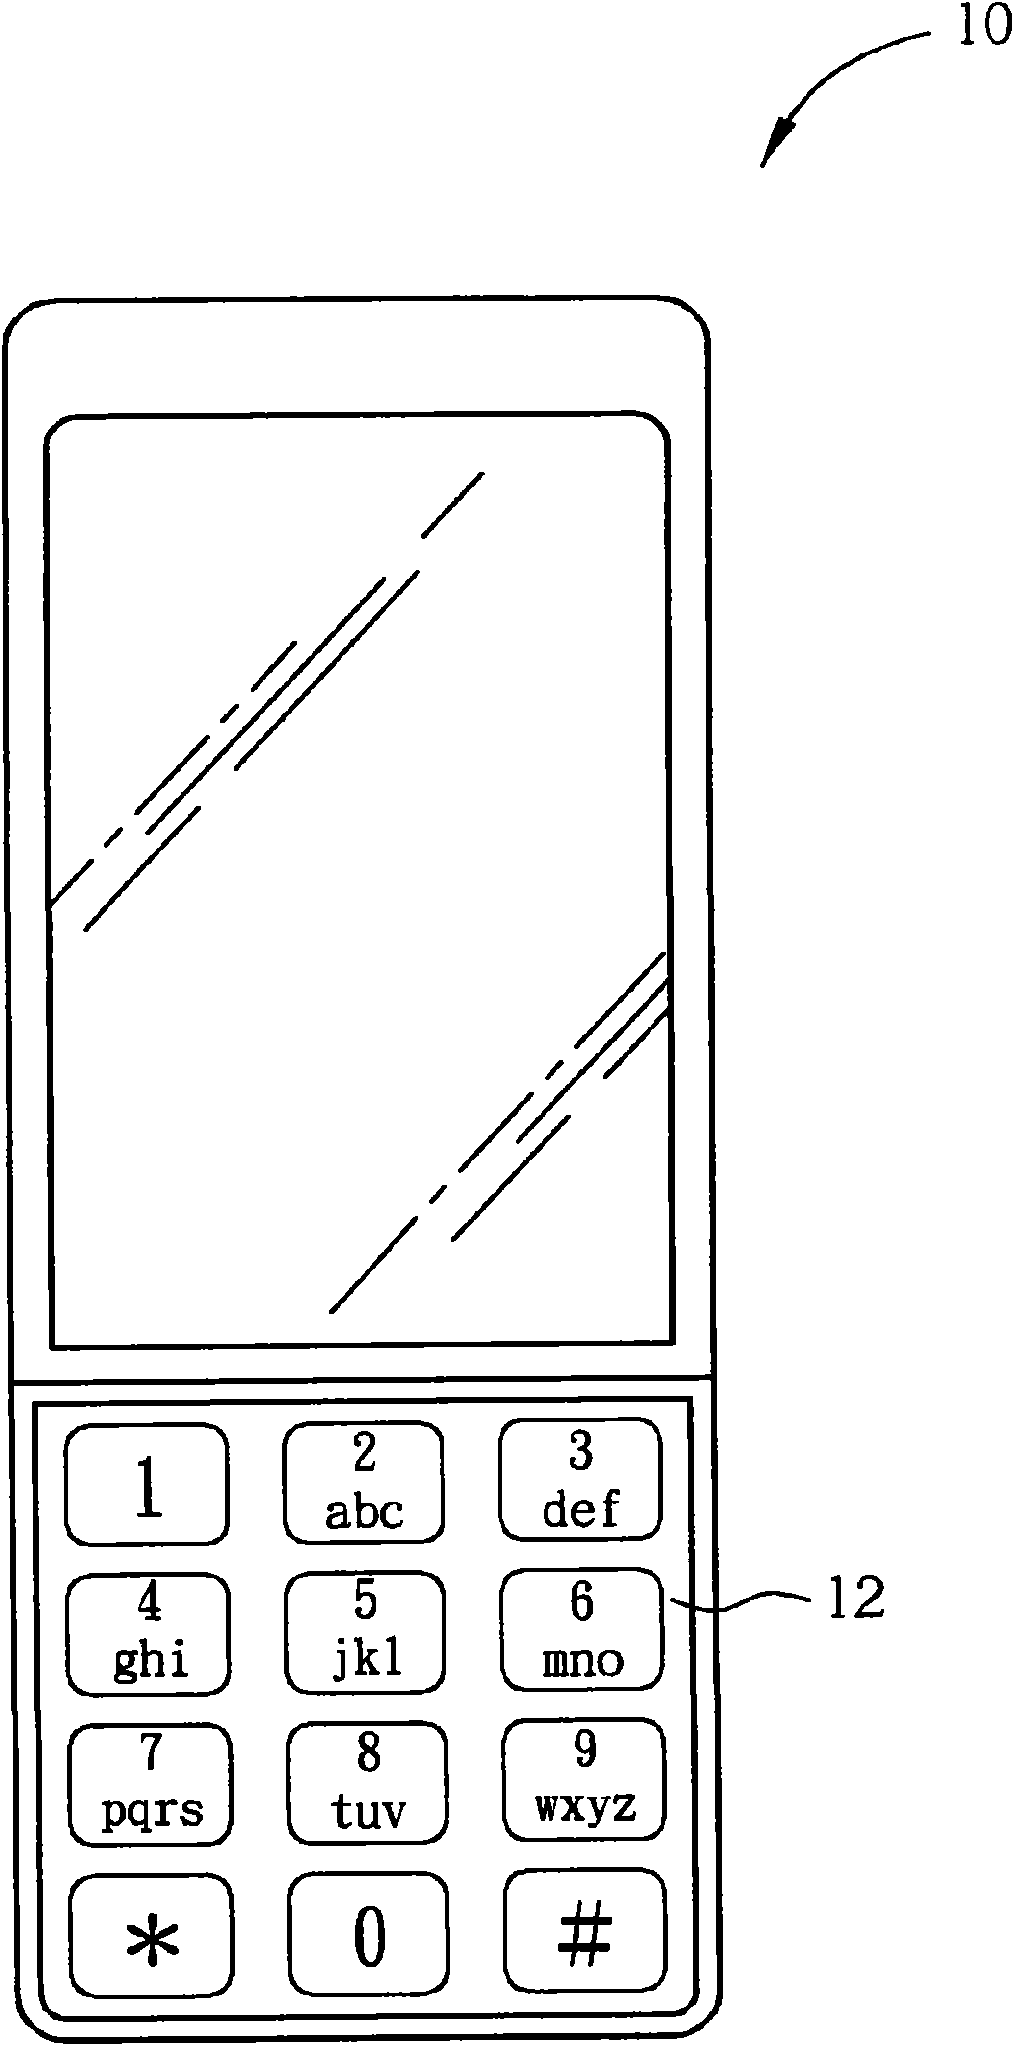 Electrophoretic display key structure